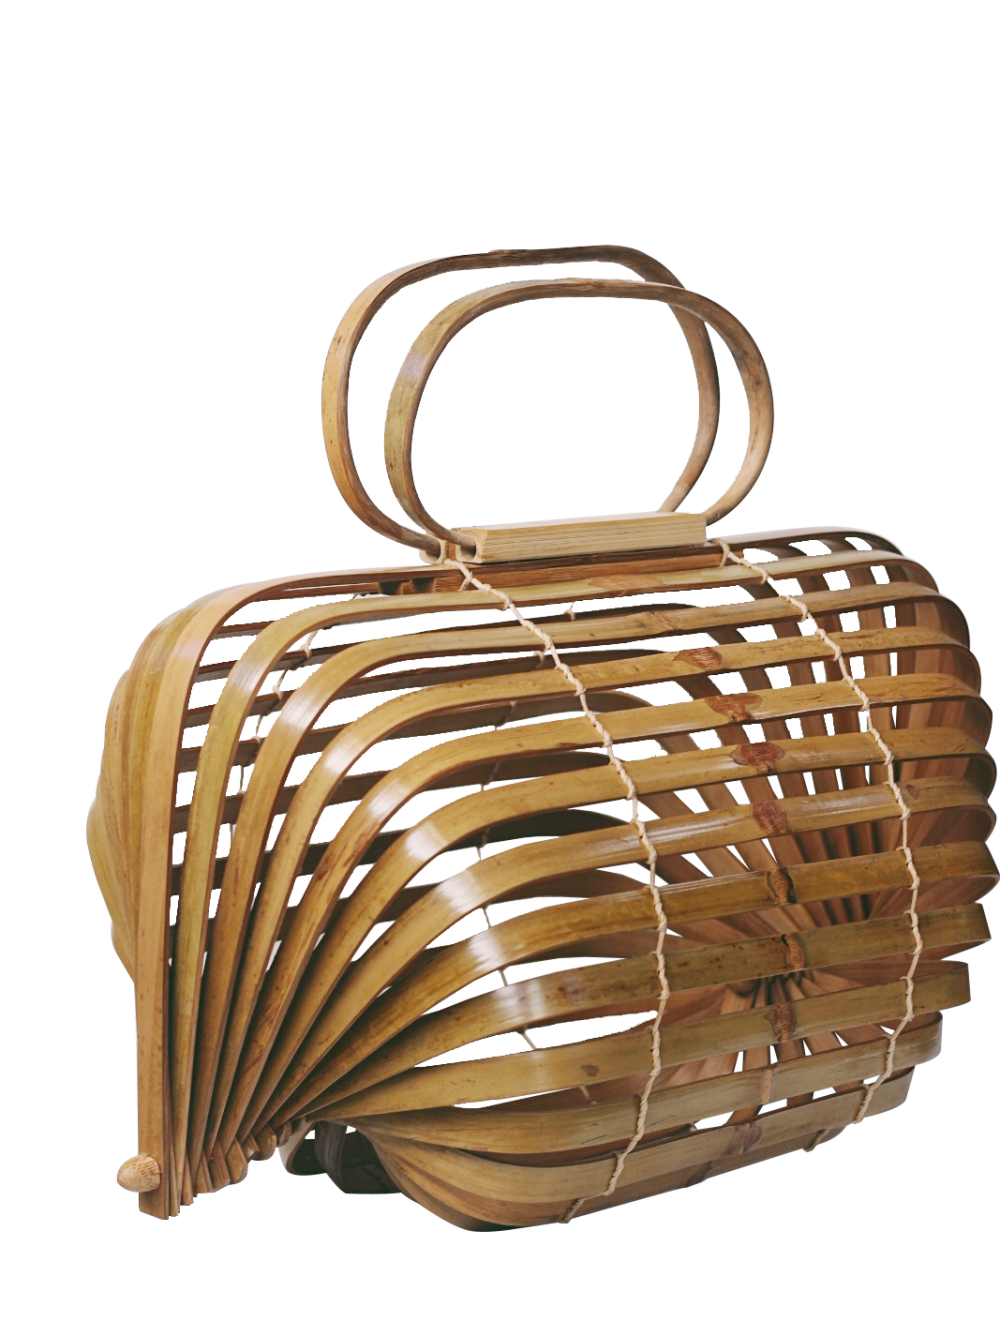 Basket Bag PNG Free Download